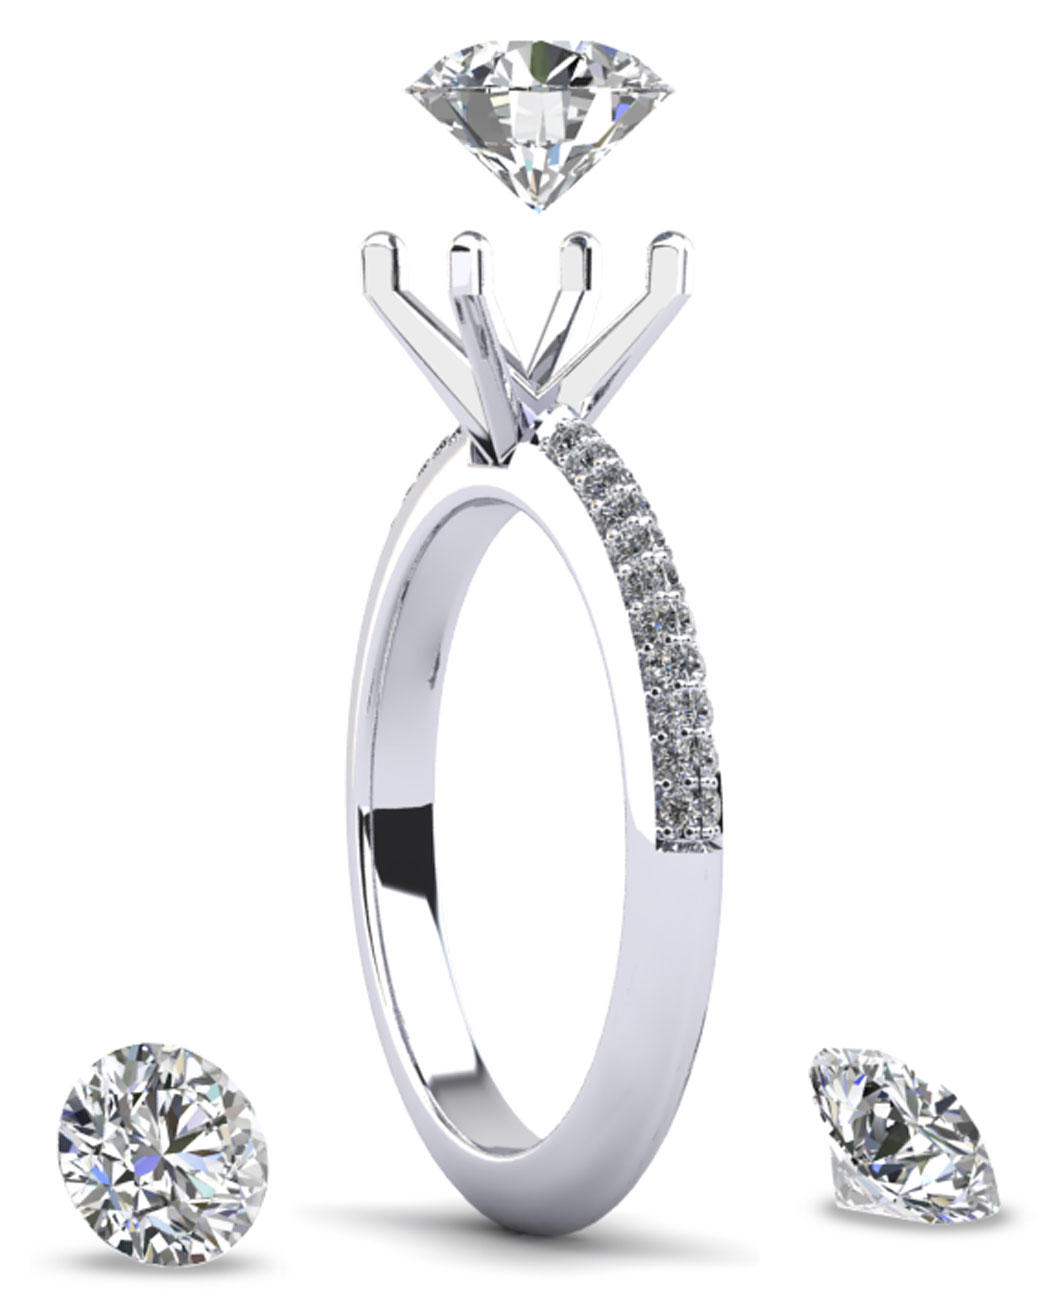 Engagement-ring